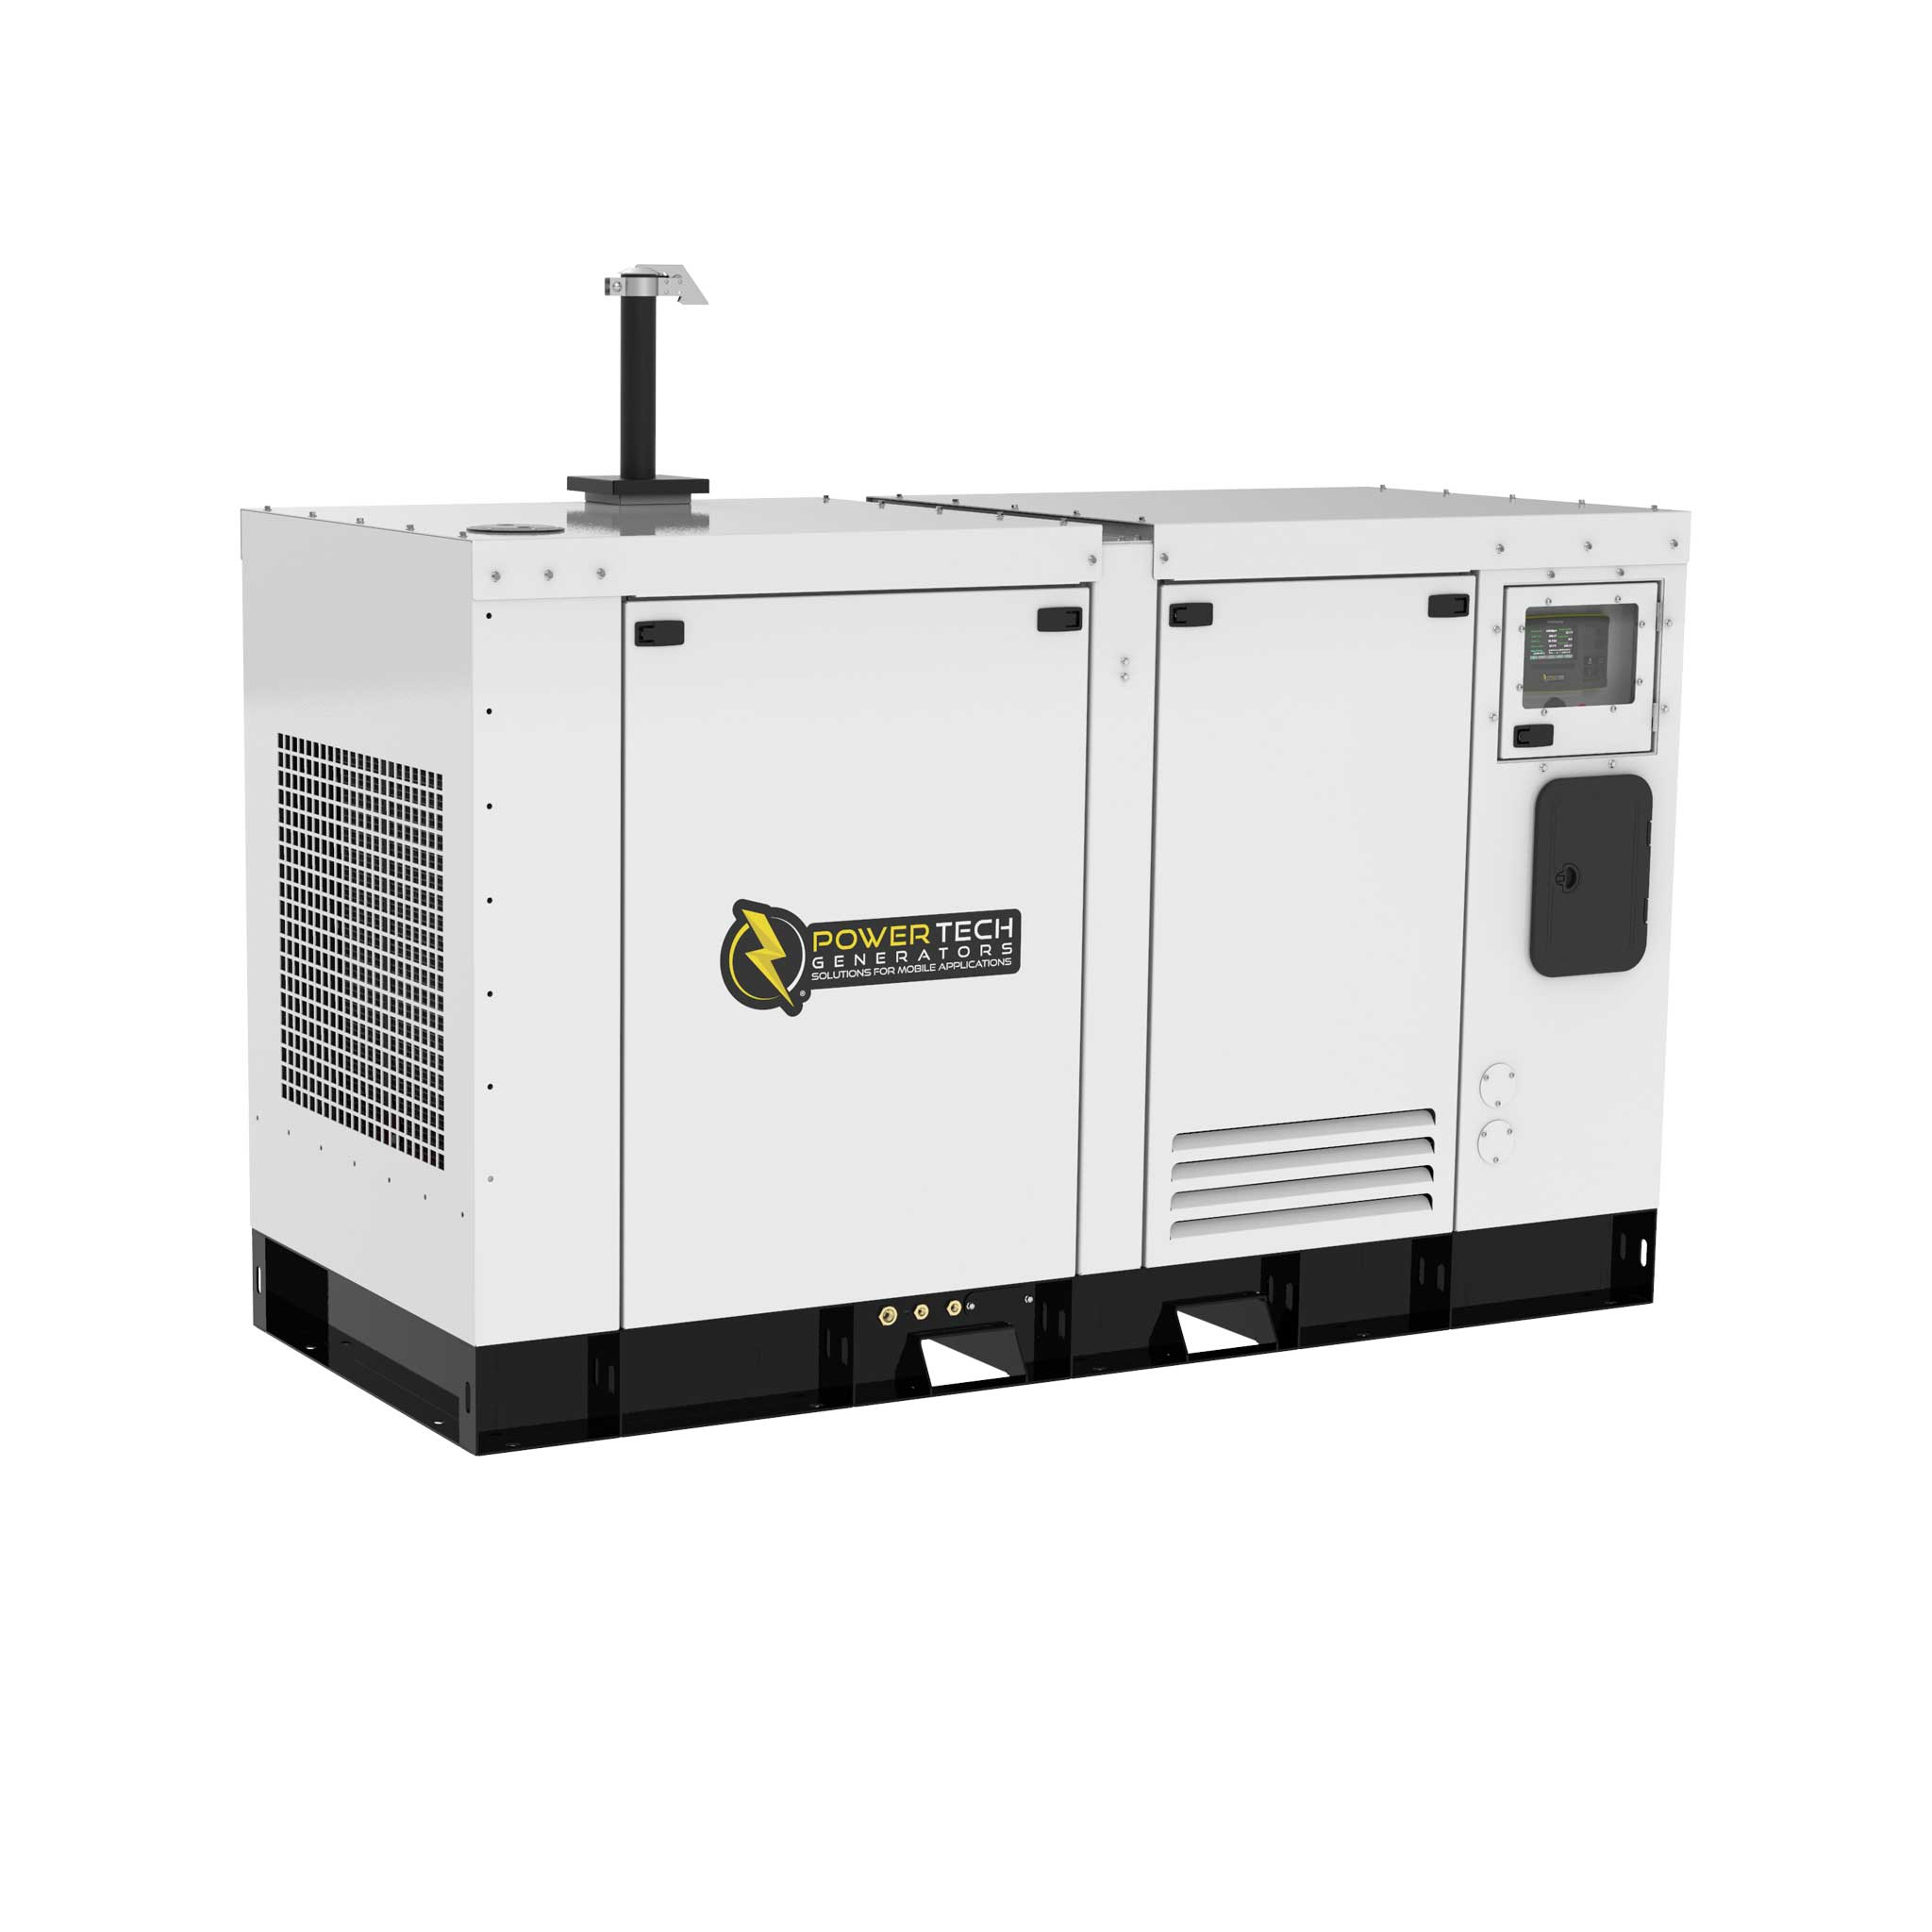 60,000 watt enclosed quiet diesel generator